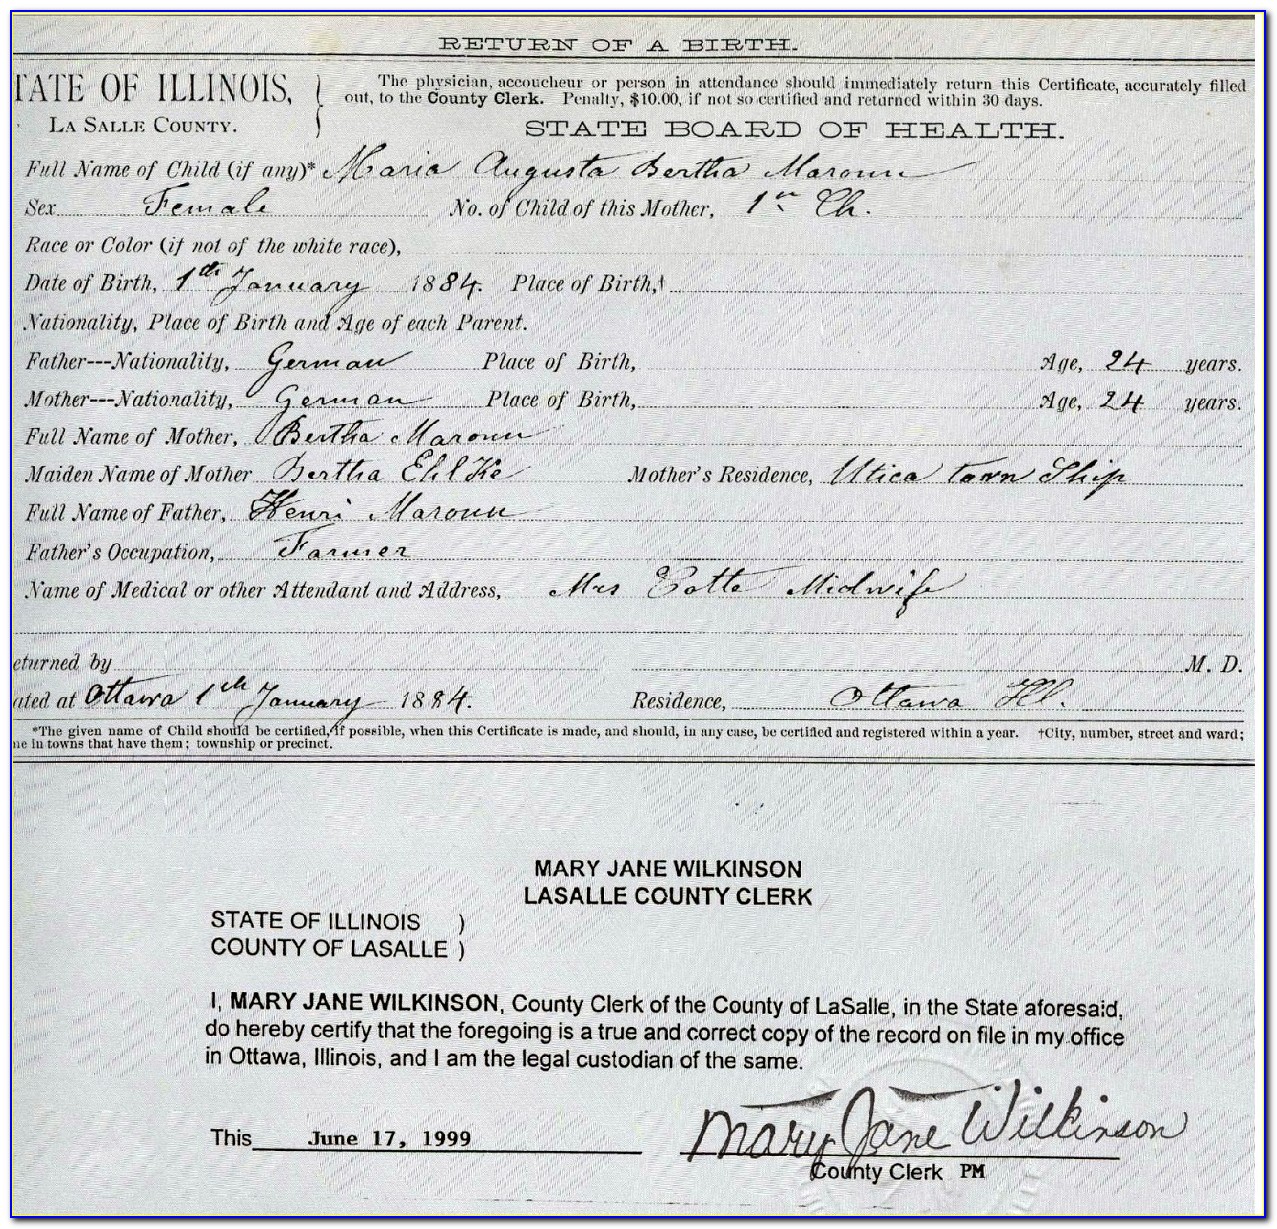 Lasalle County Birth Certificate